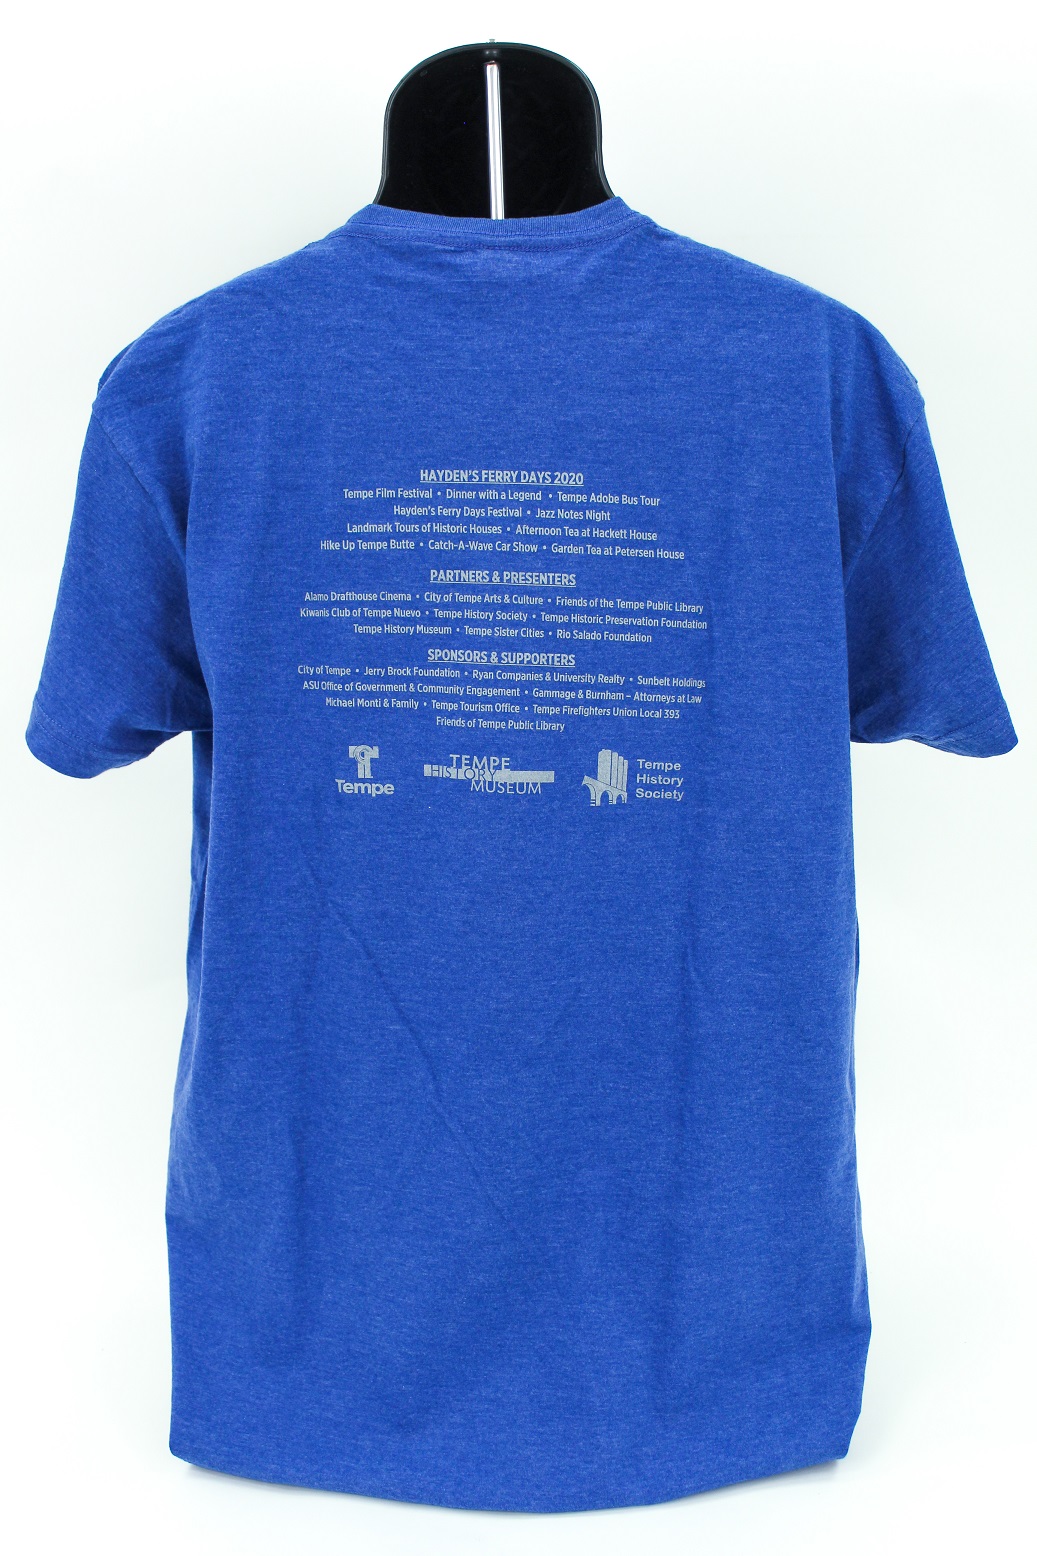 T-Shirt: Hayden's Ferry Days 2020 - Tempe History Society